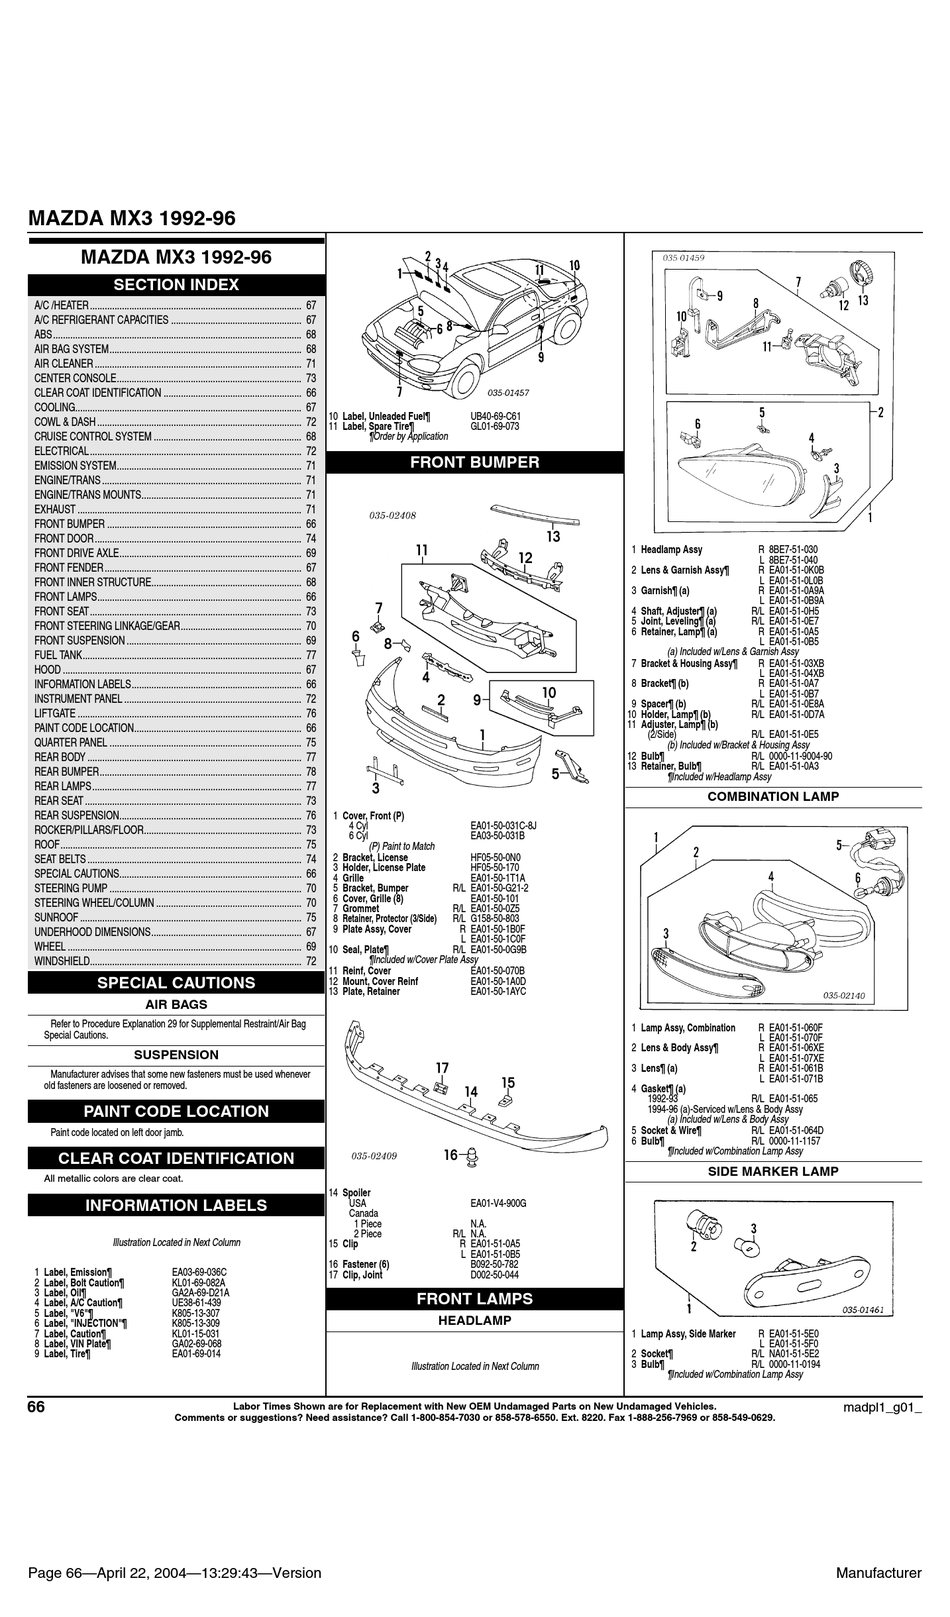 Mazda Mx-3 Manual Pdf Download | Manualslib